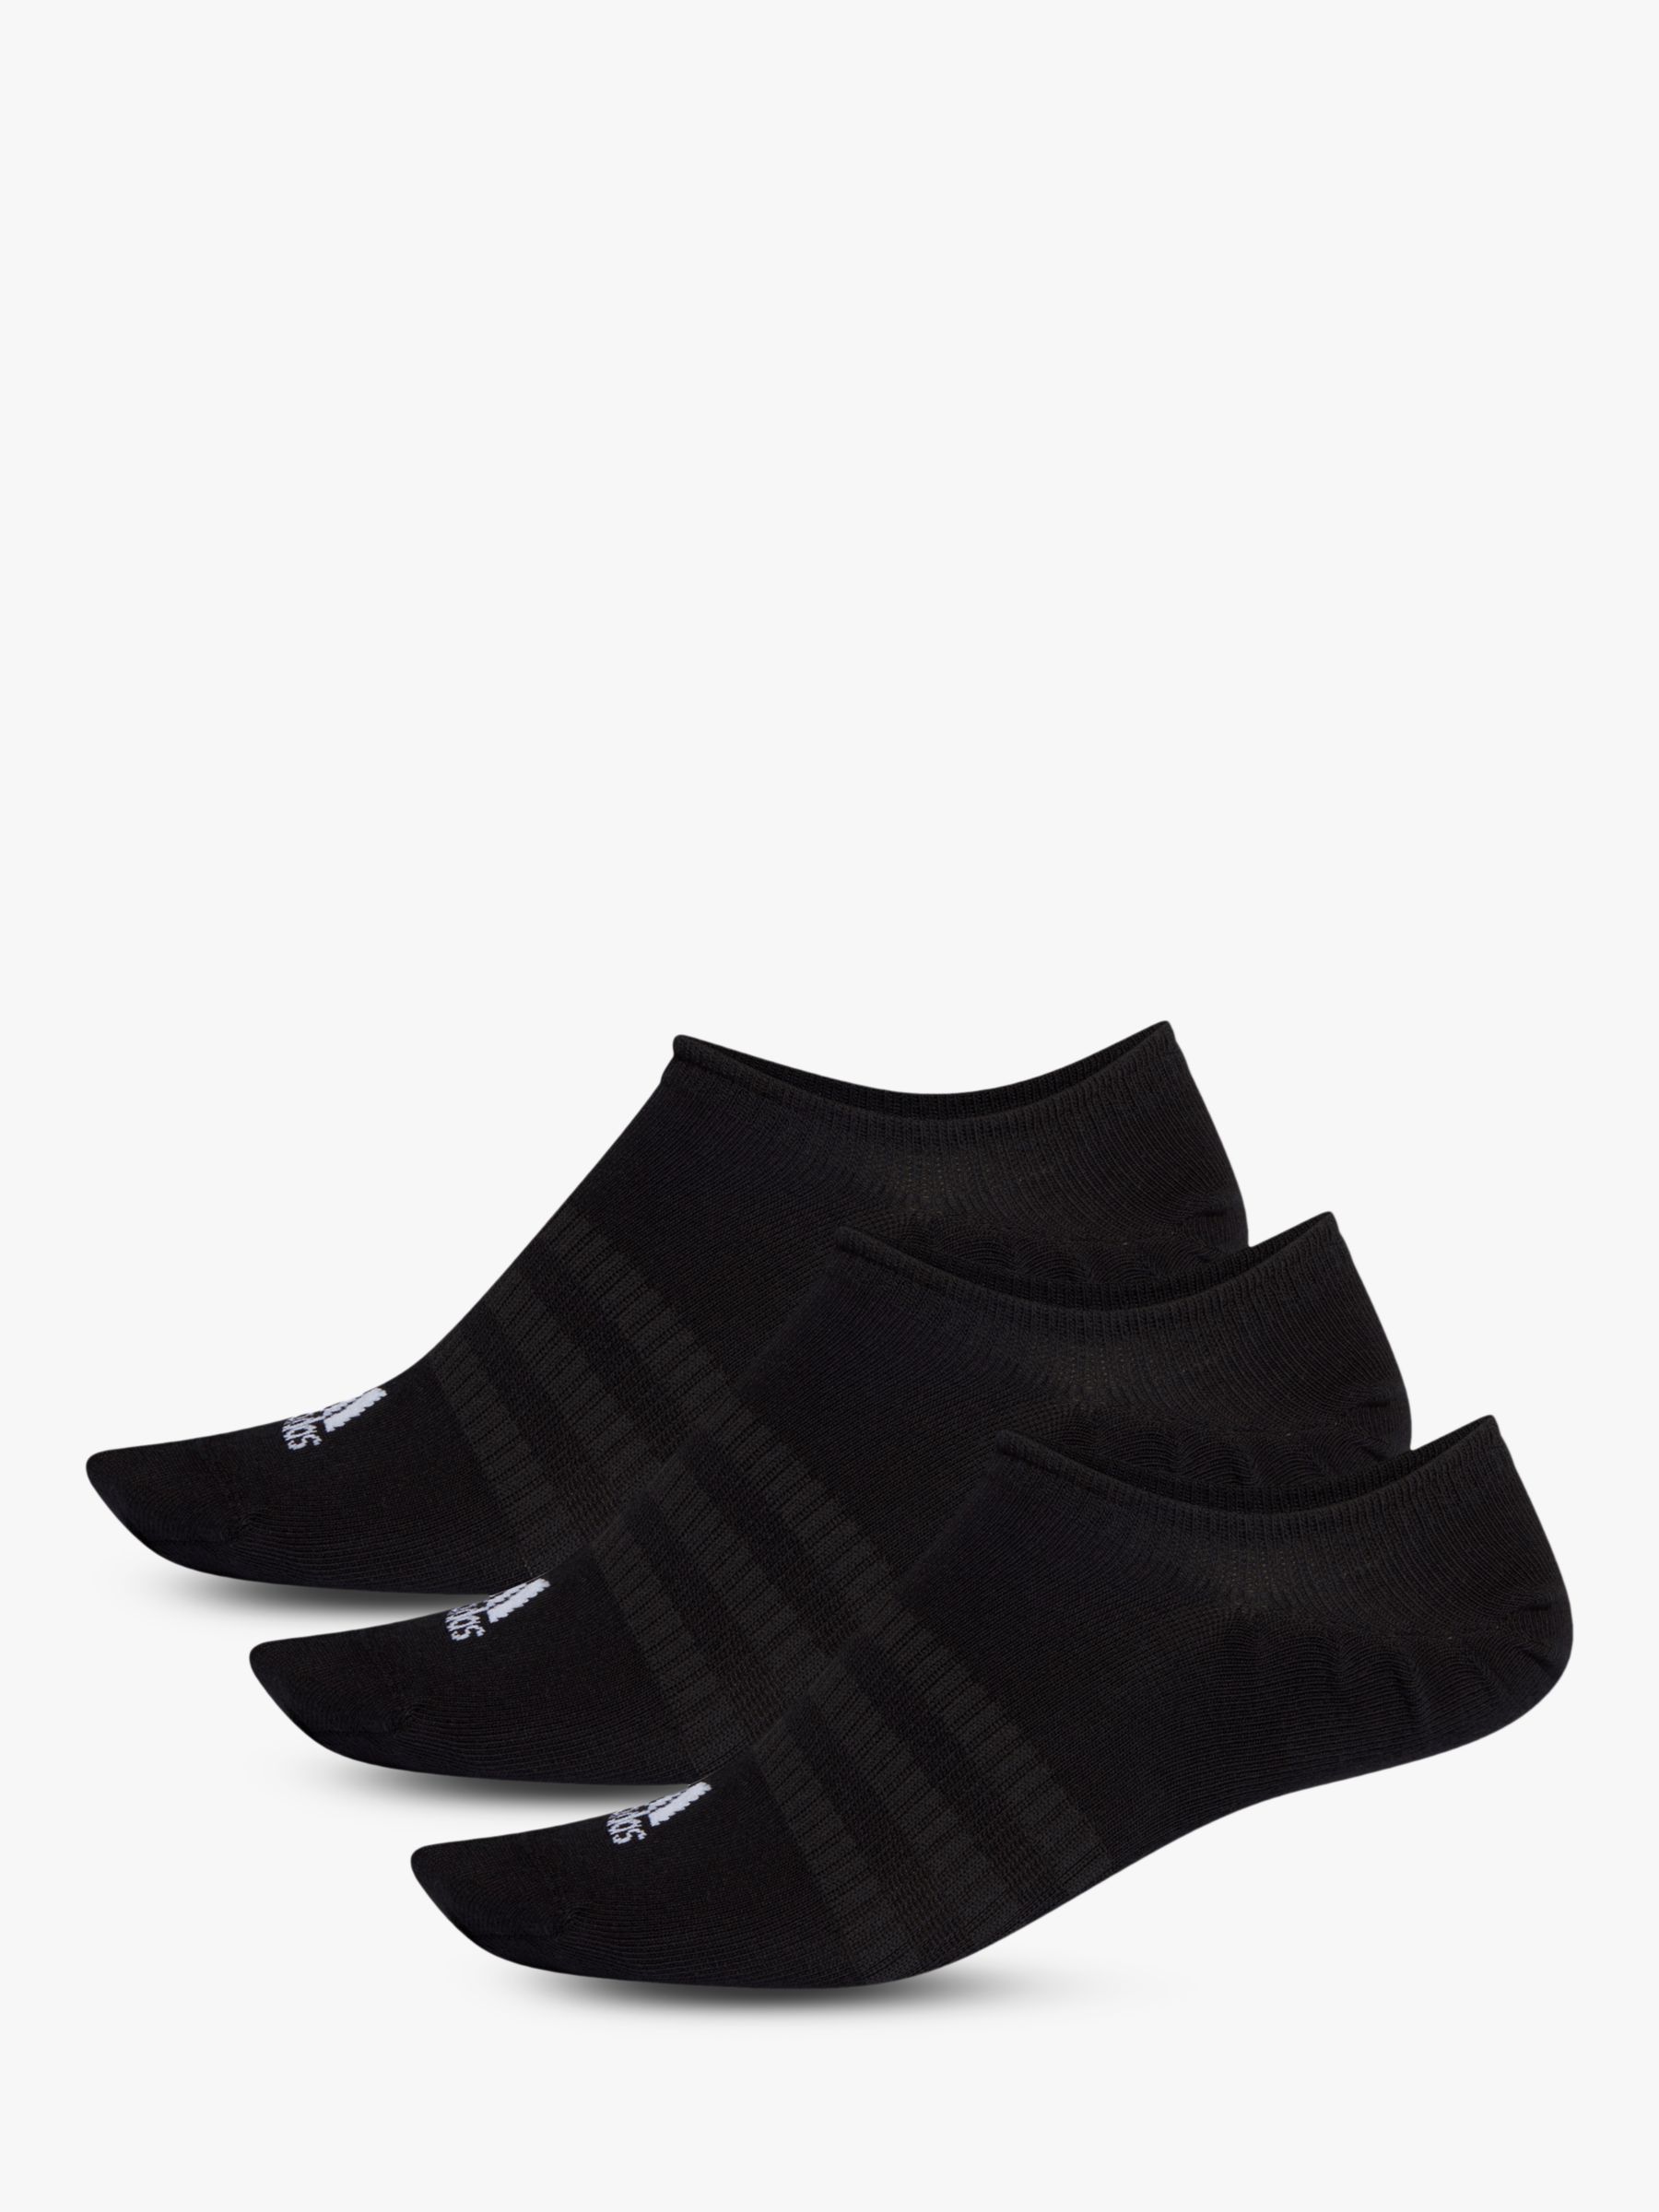 adidas No Show Training Socks, Pack of 3, Black at John Lewis & Partners